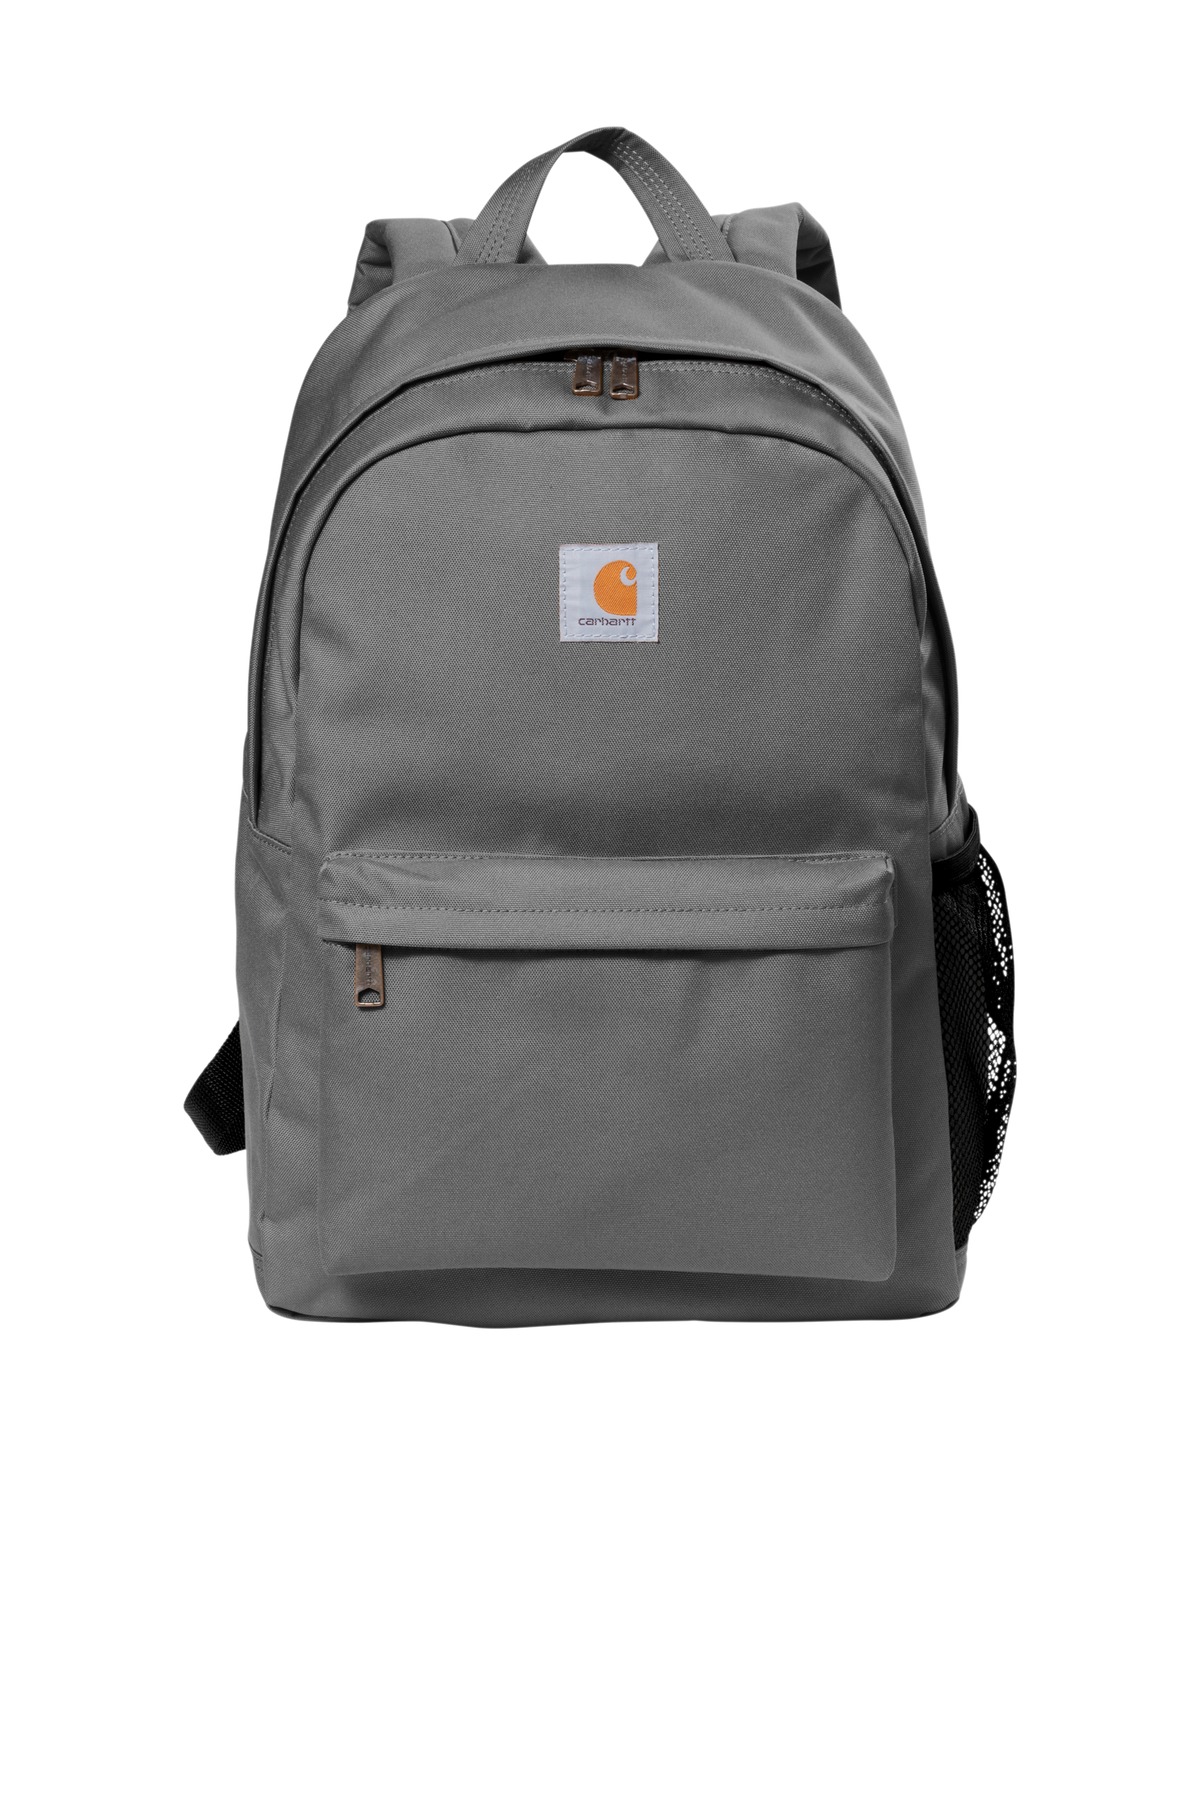 Carhartt Canvas Backpack-